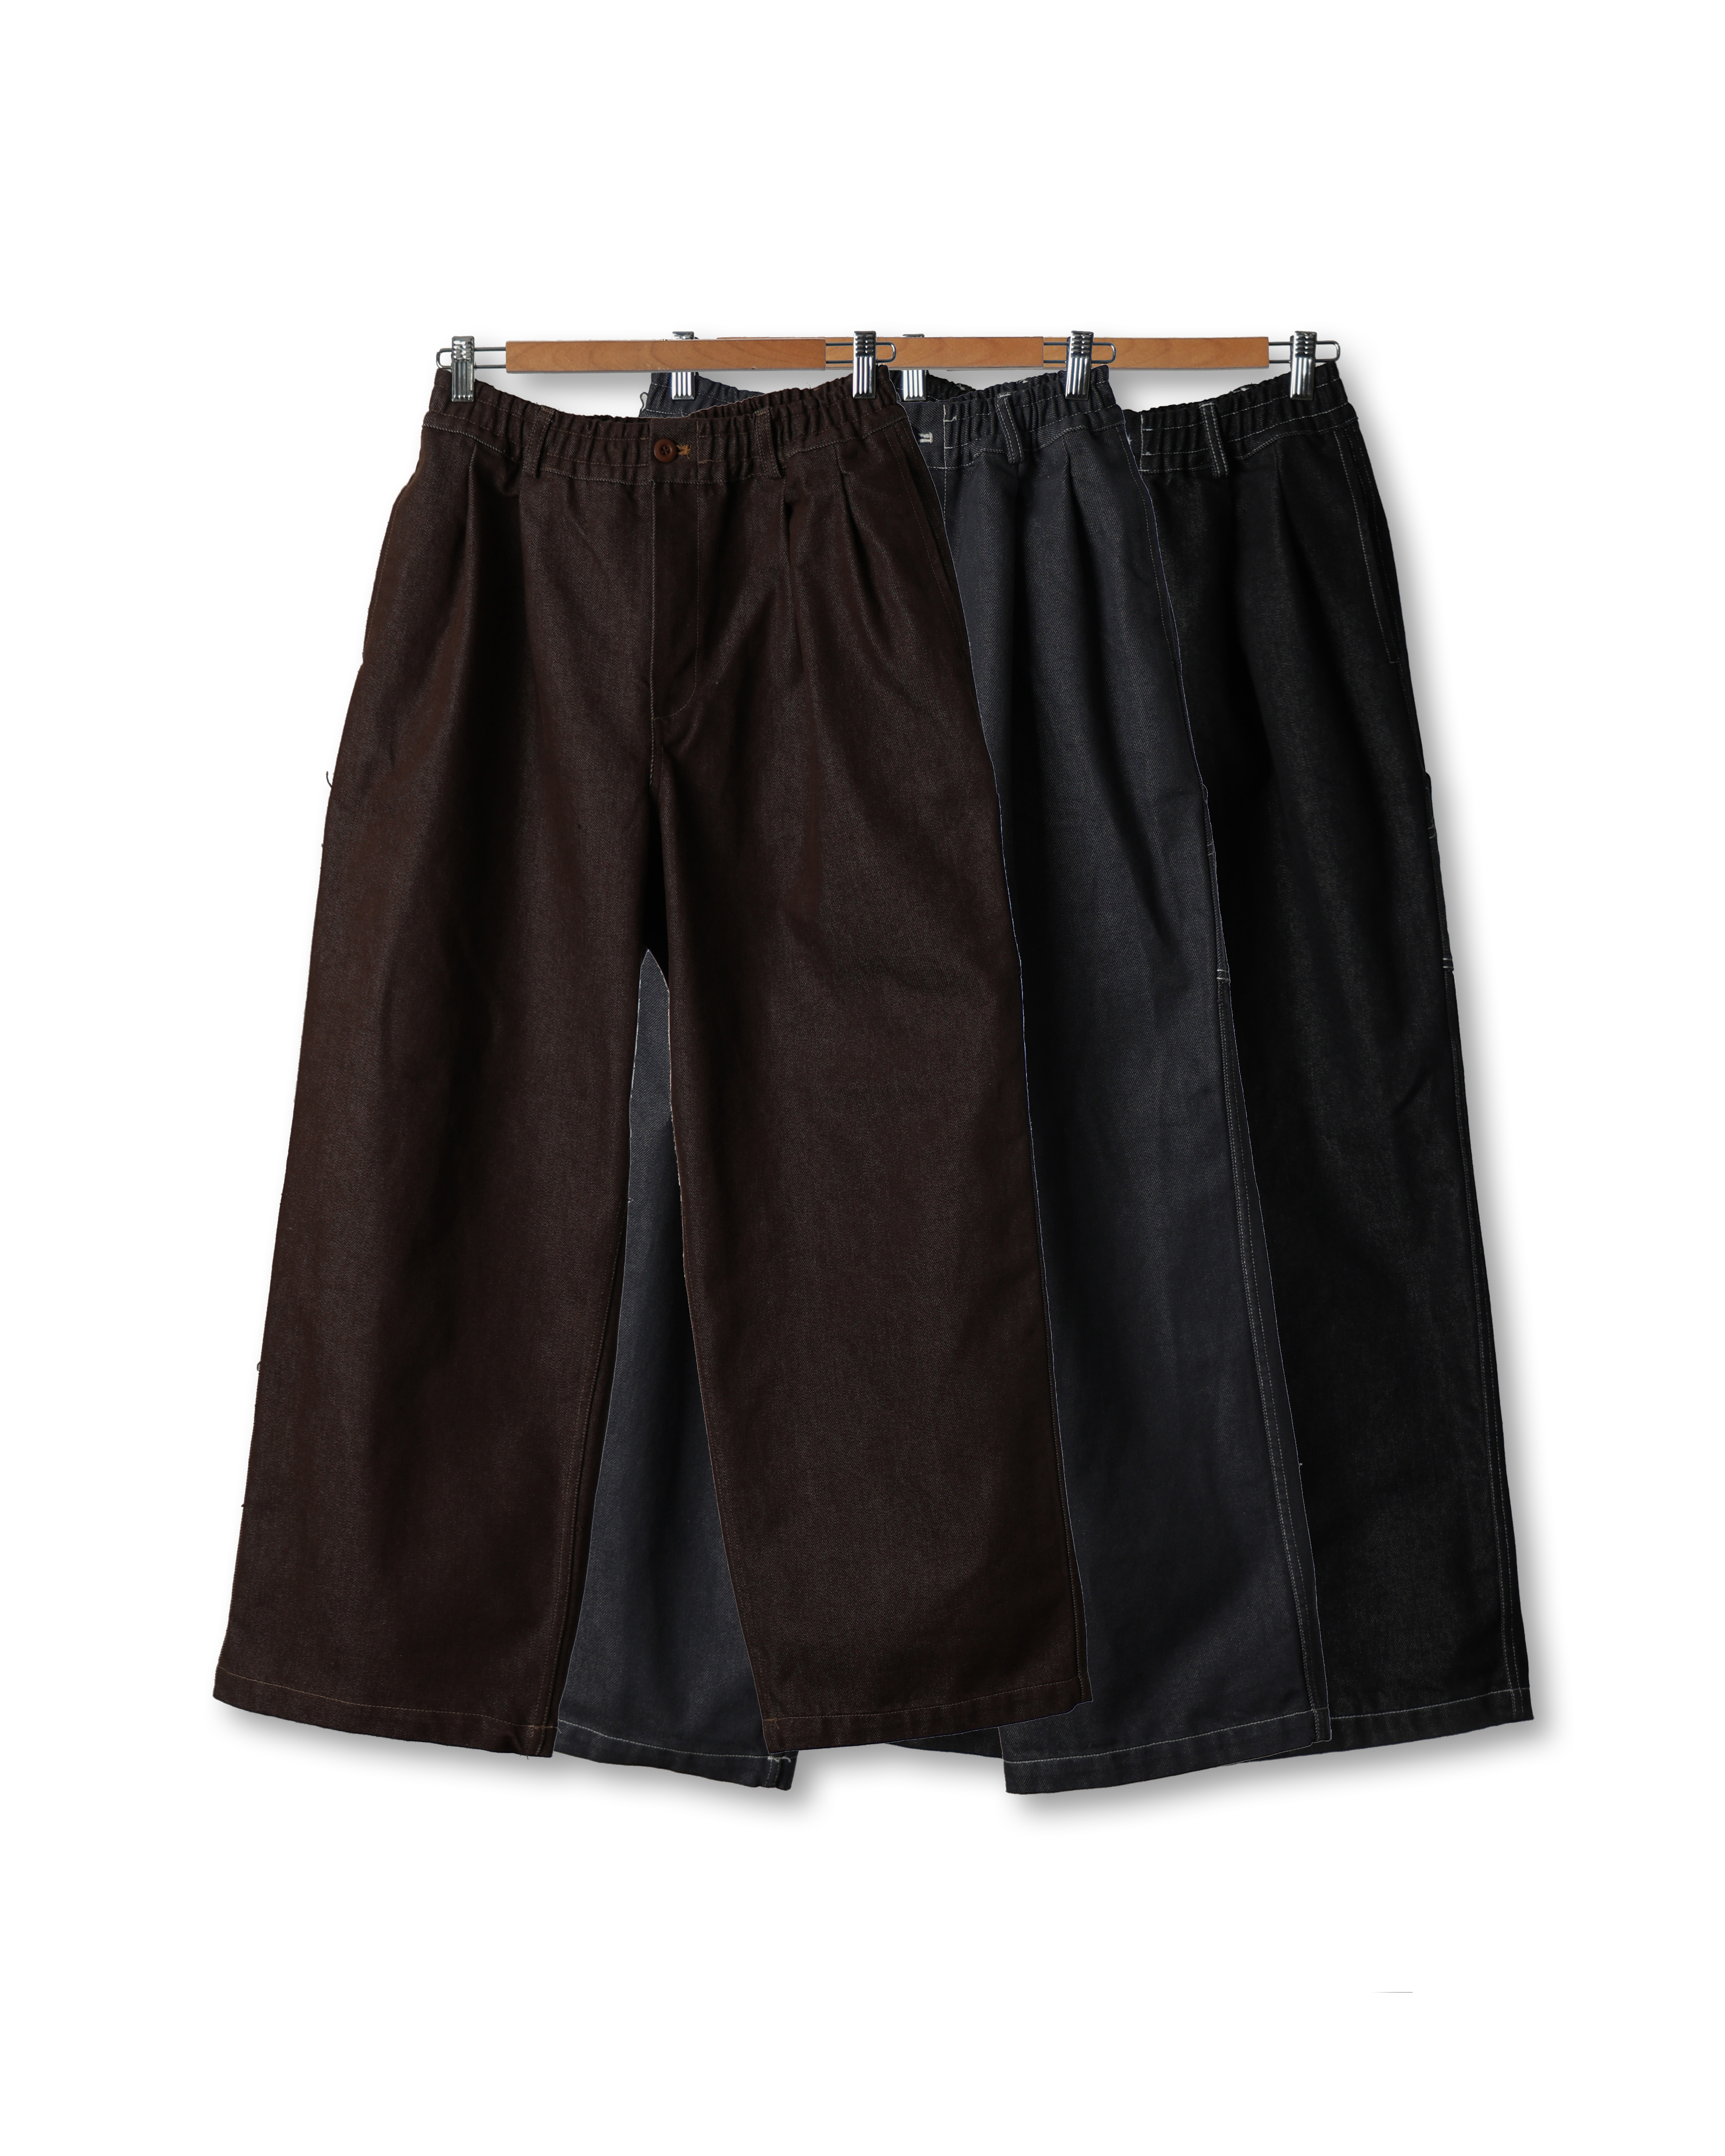 INTR Work Carpenter Wide Denim Pants (Black/Gray/Brown)